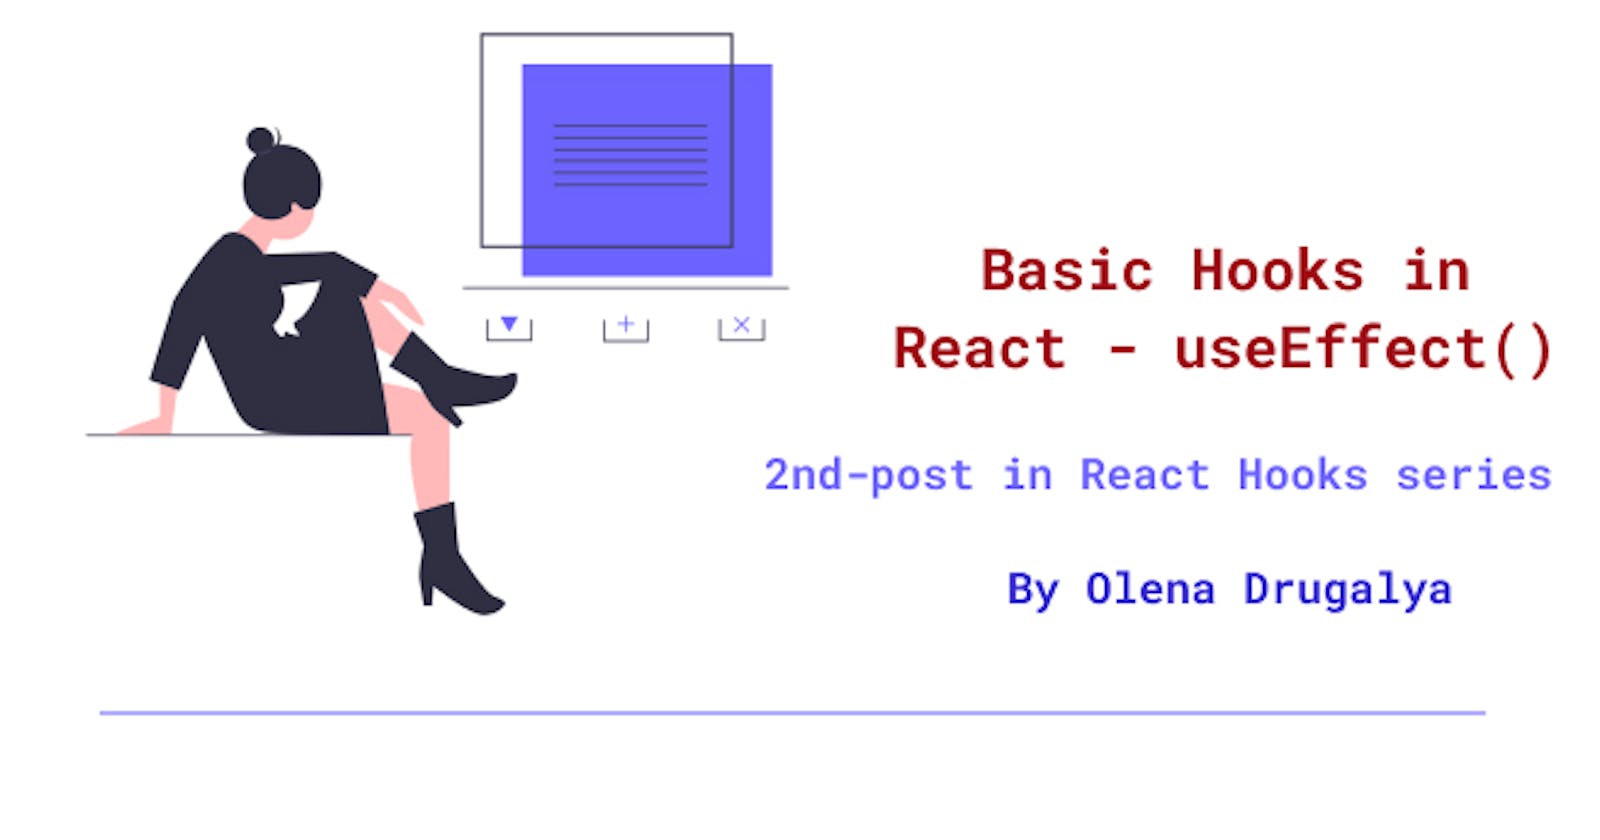 Basic Hooks in React - useEffect()